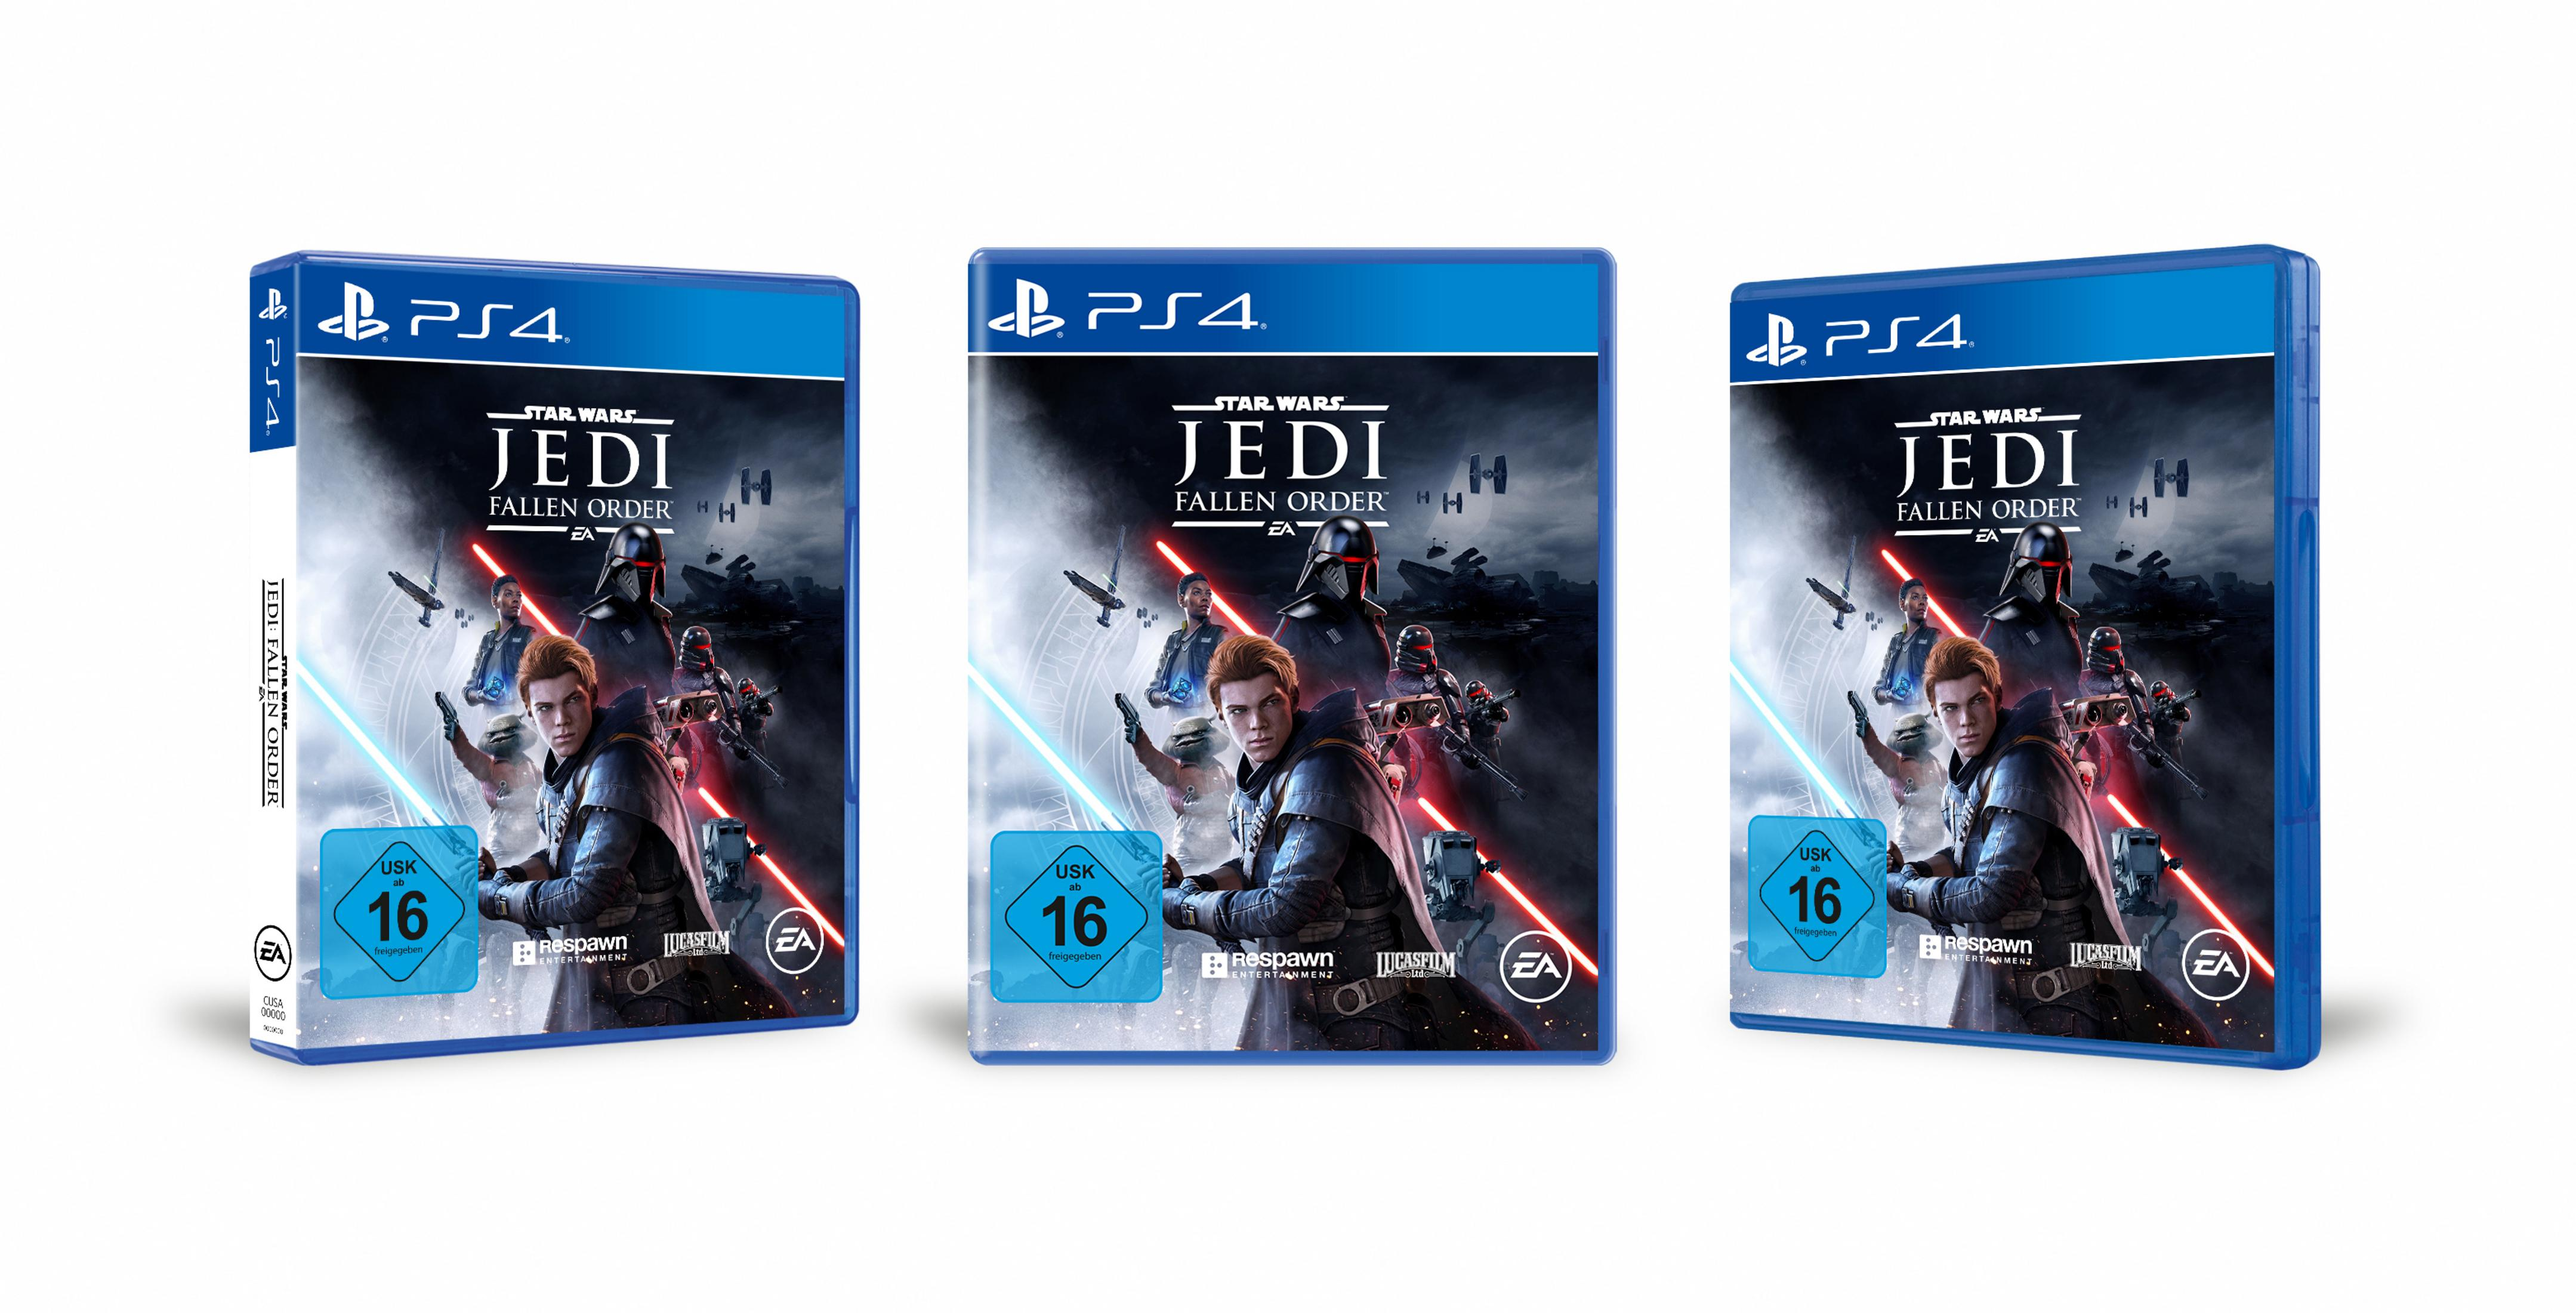 Wars Order 4] PS4 Jedi Star - Fallen [PlayStation